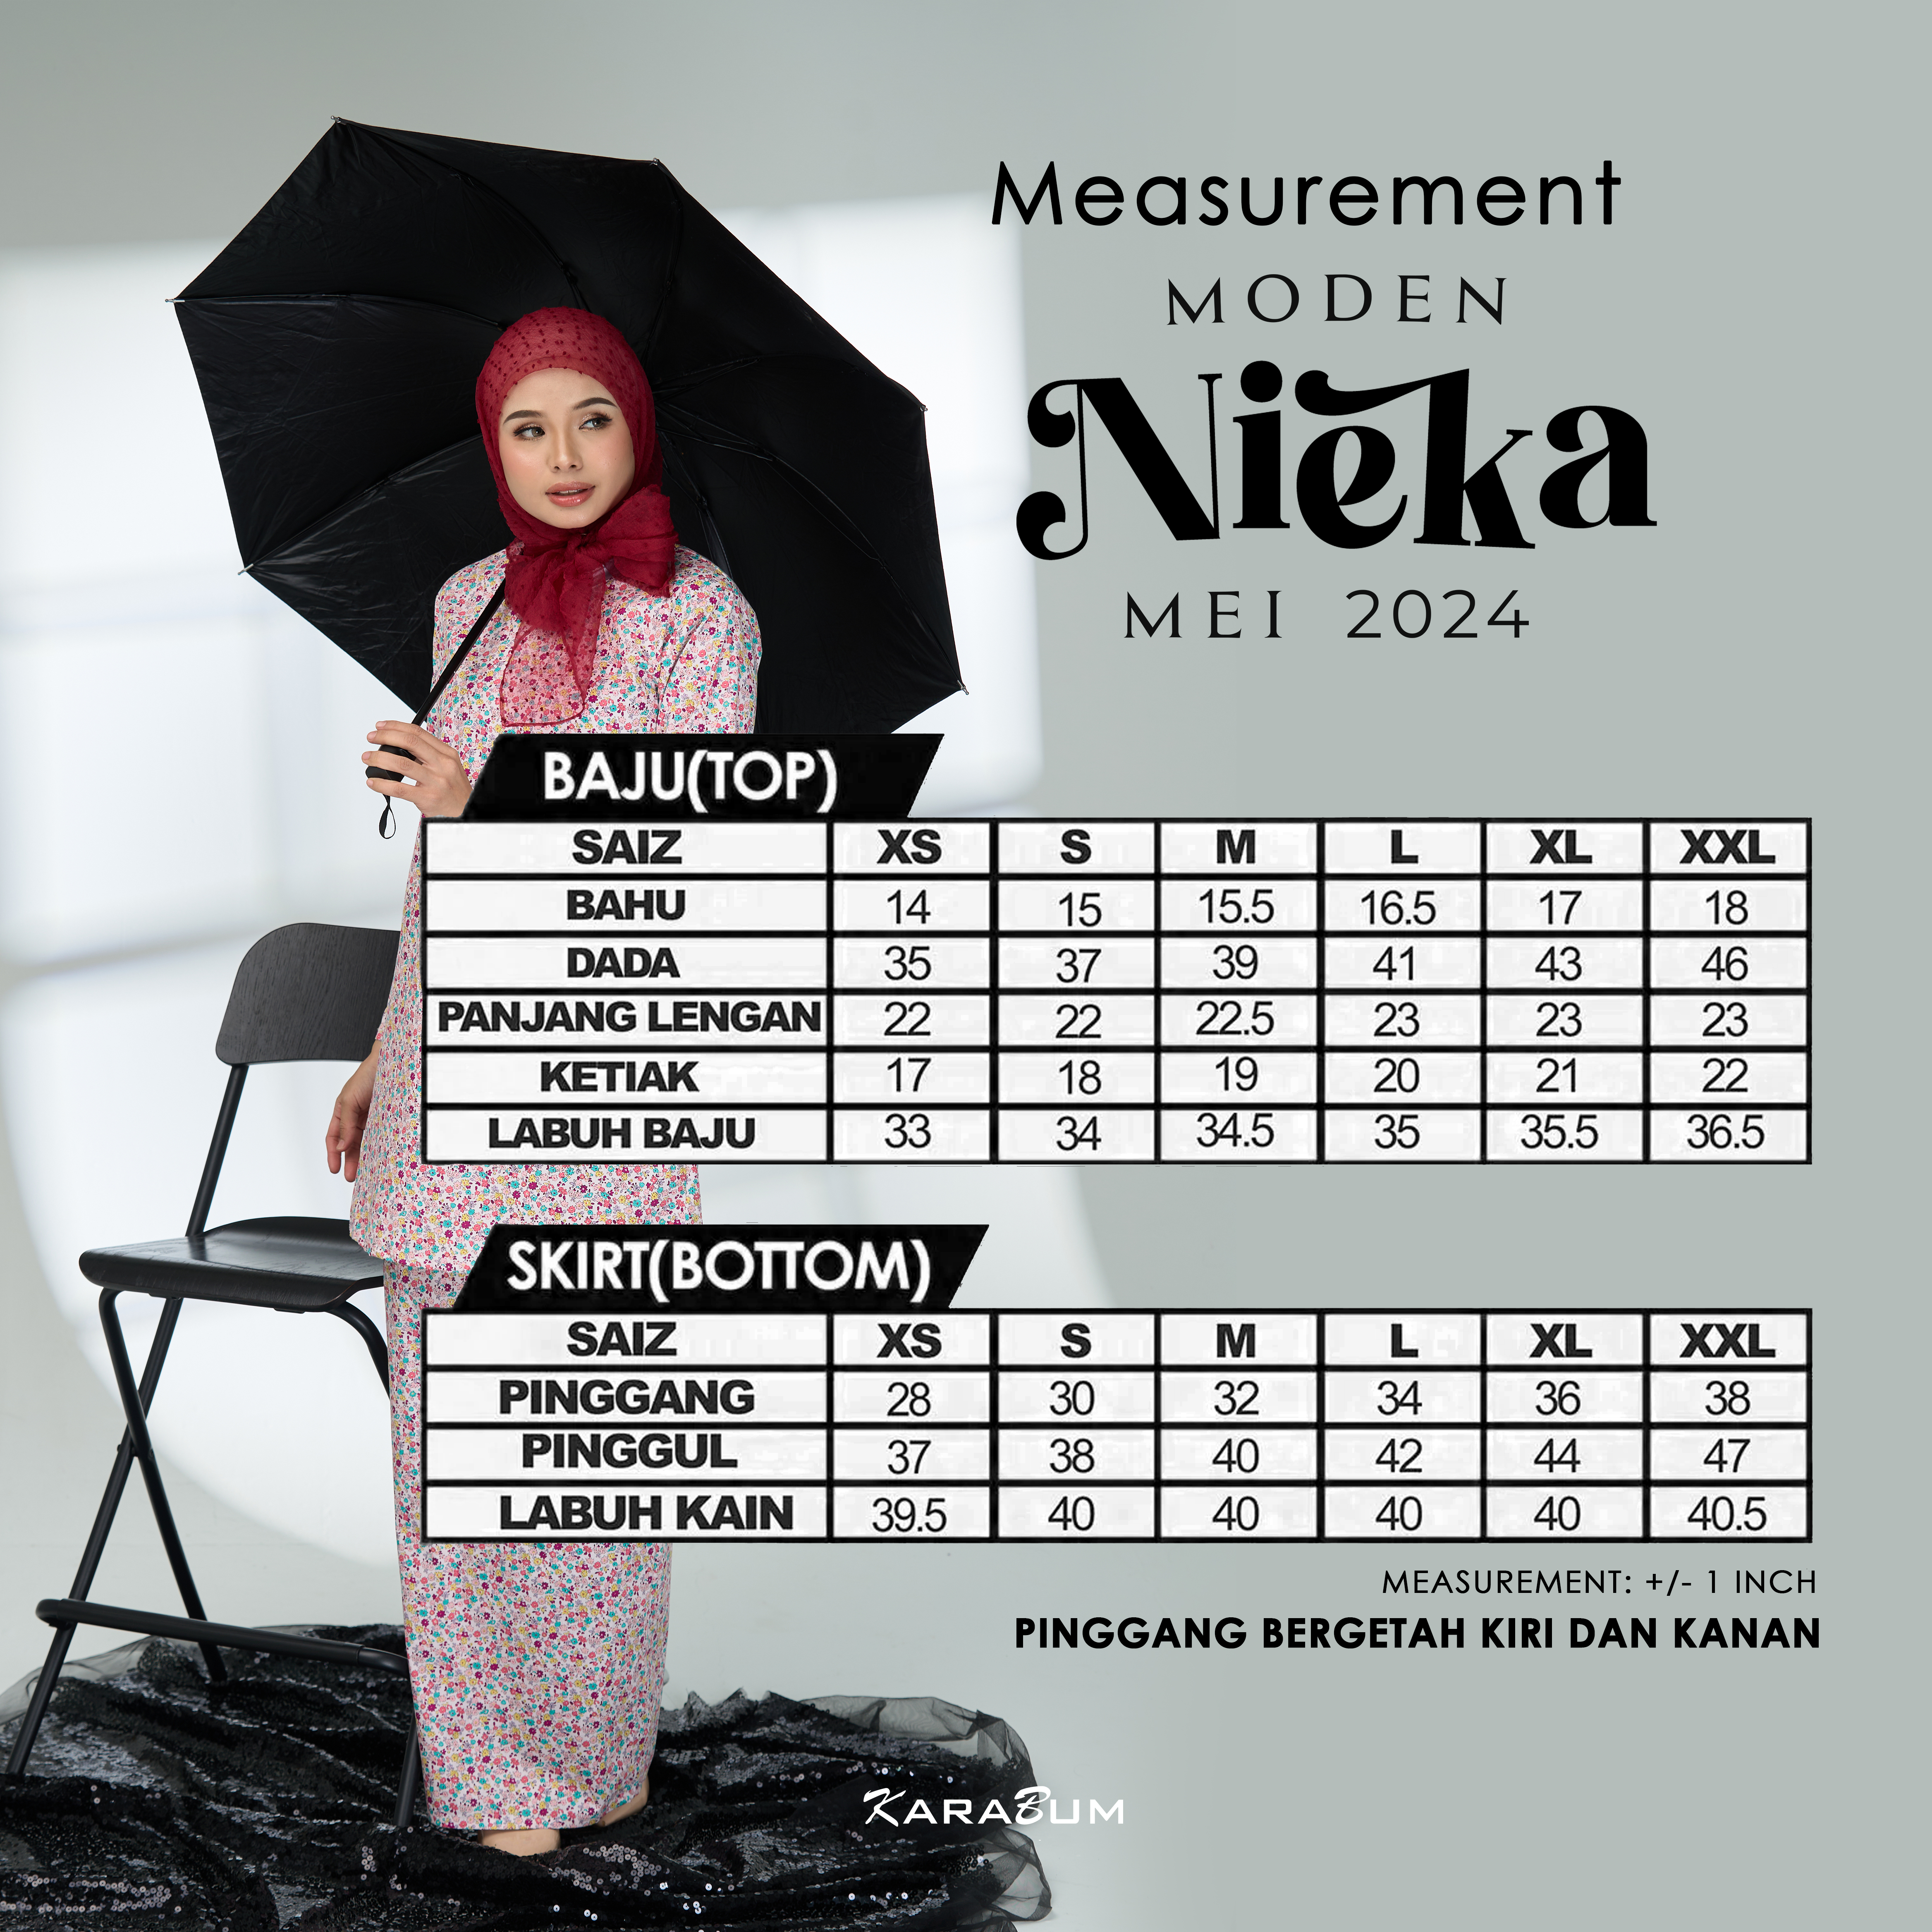 Measurement Moden Nieka May